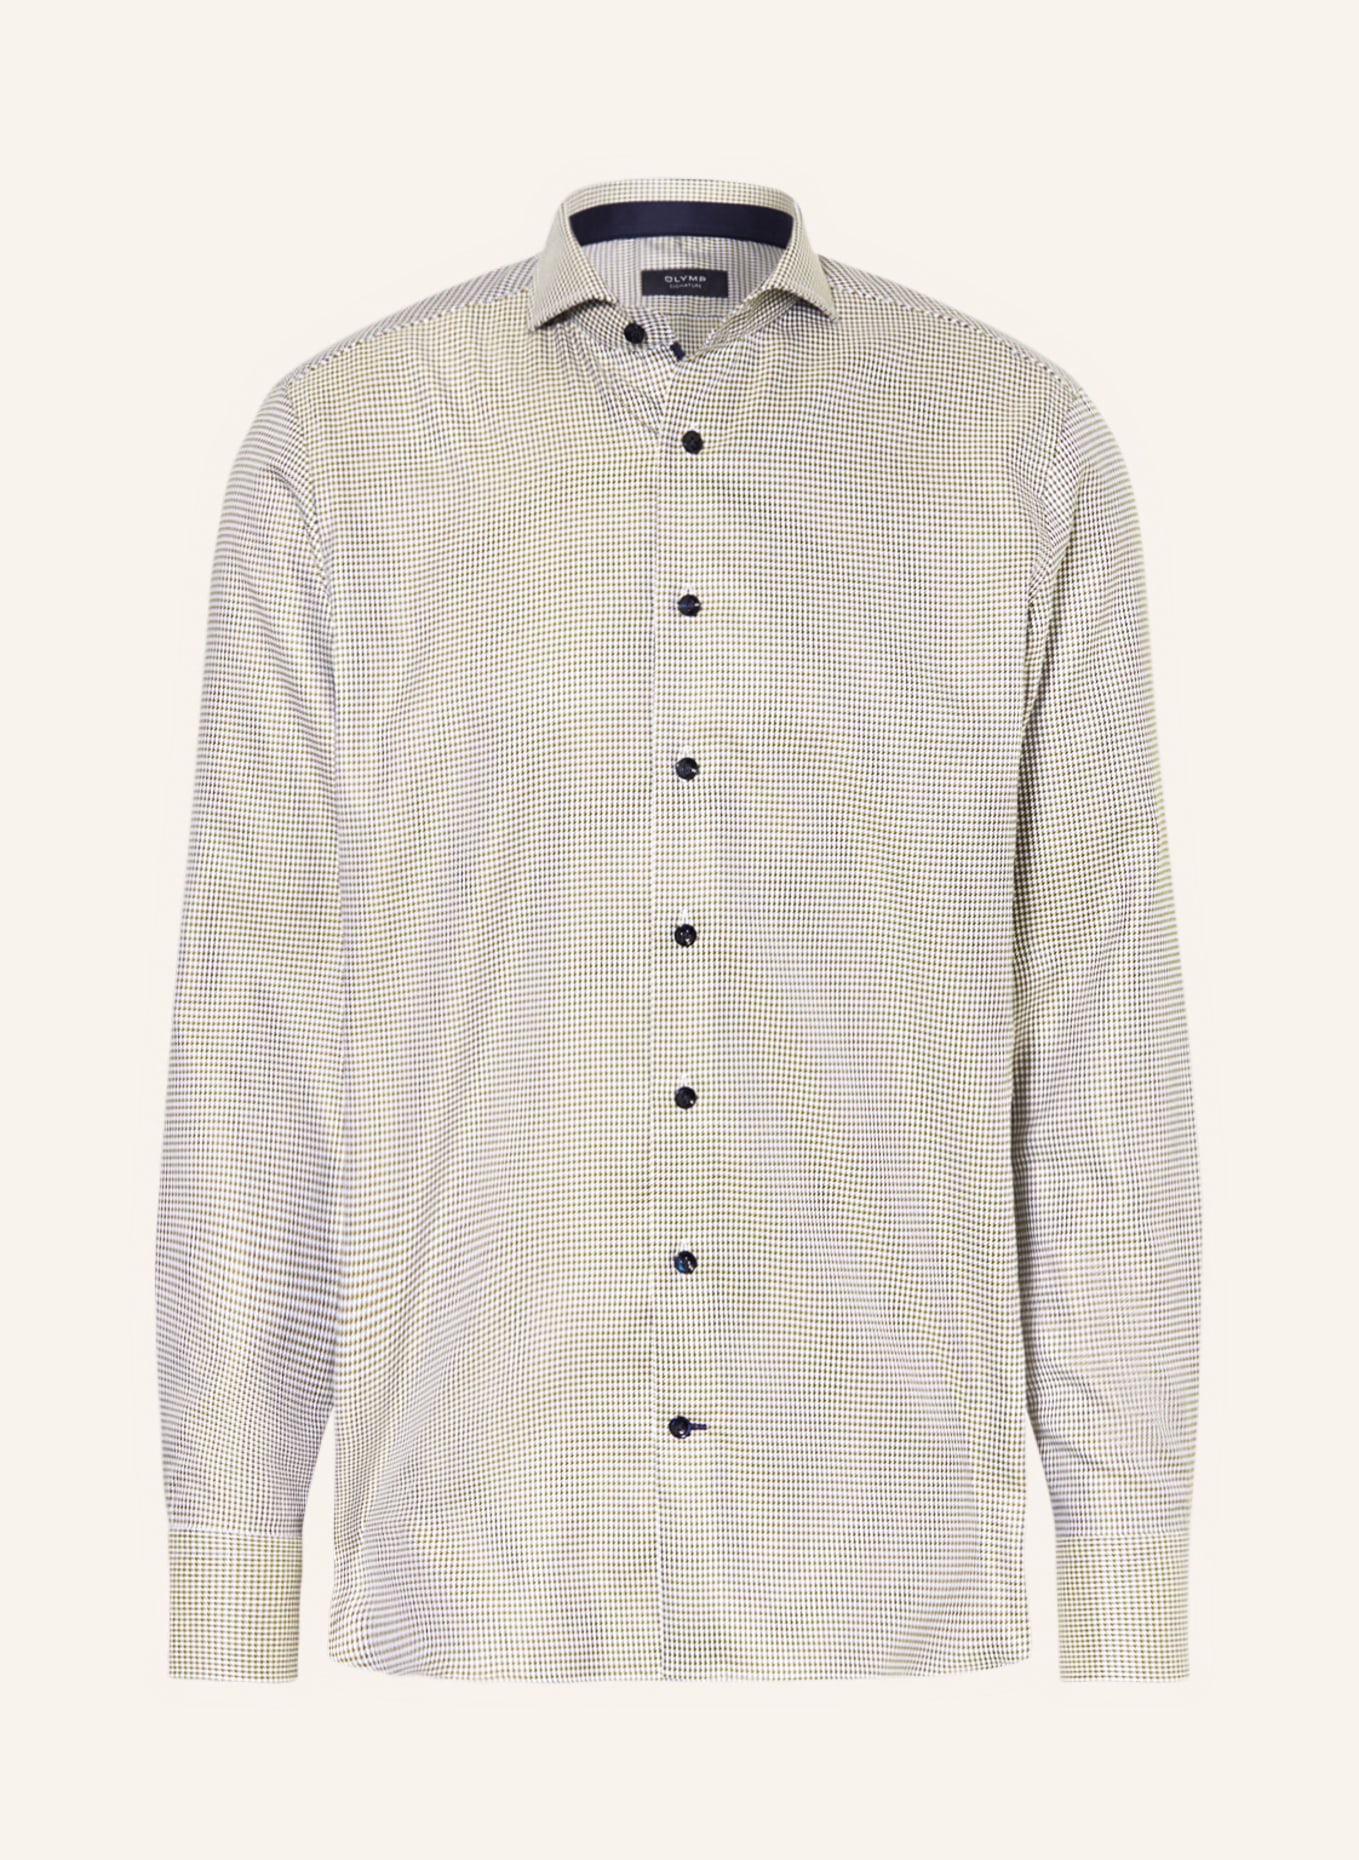 OLYMP SIGNATURE Hemd tailored fit, Farbe: GRÜN/ HELLGRÜN (Bild 1)